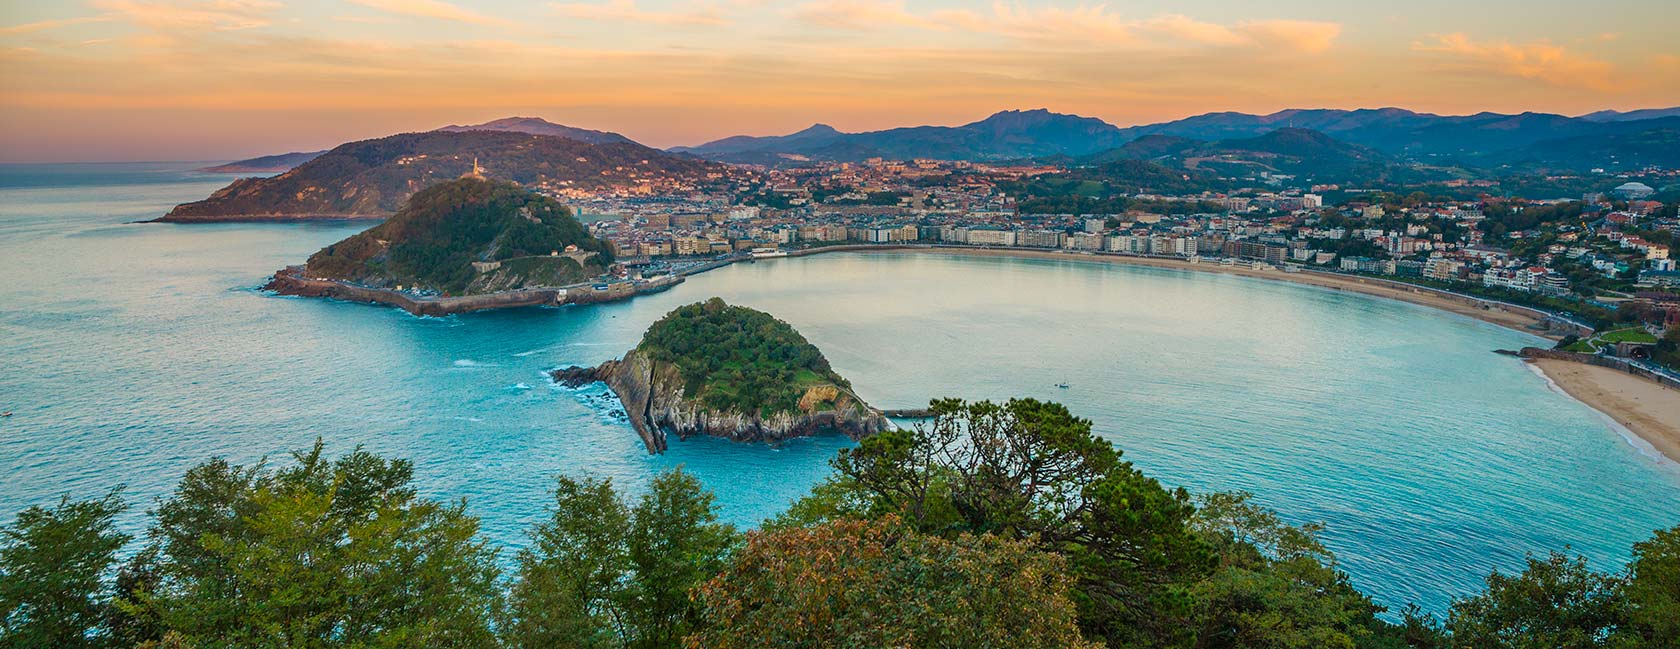 Razones para elegir Donostia / San Sebastián como sede de tu evento 